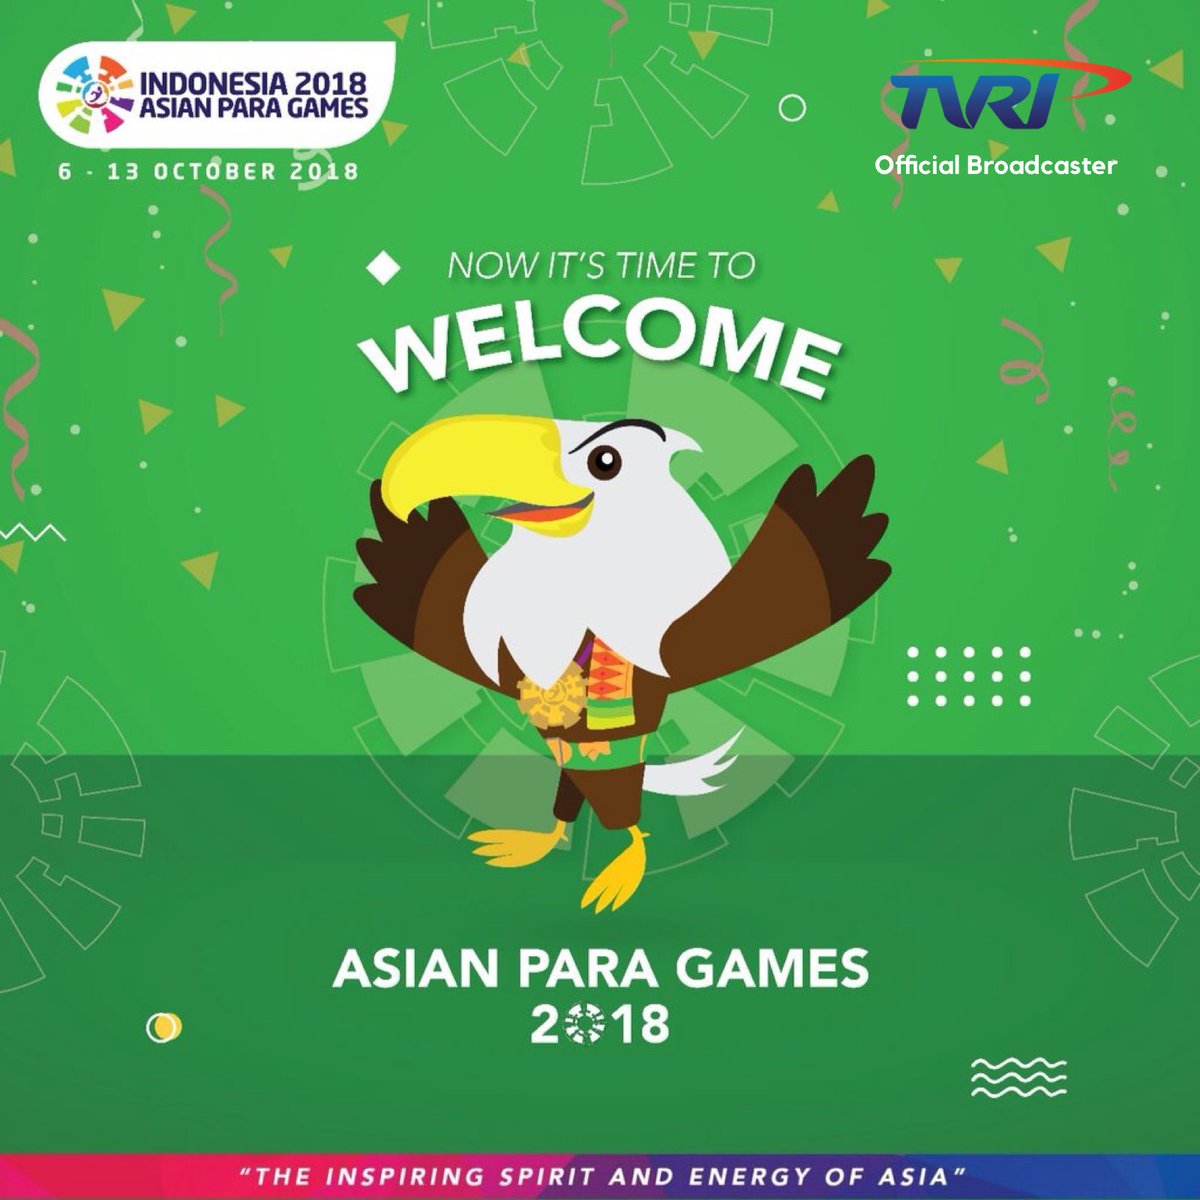 Asian Para Games Indonesia 2018 image 1